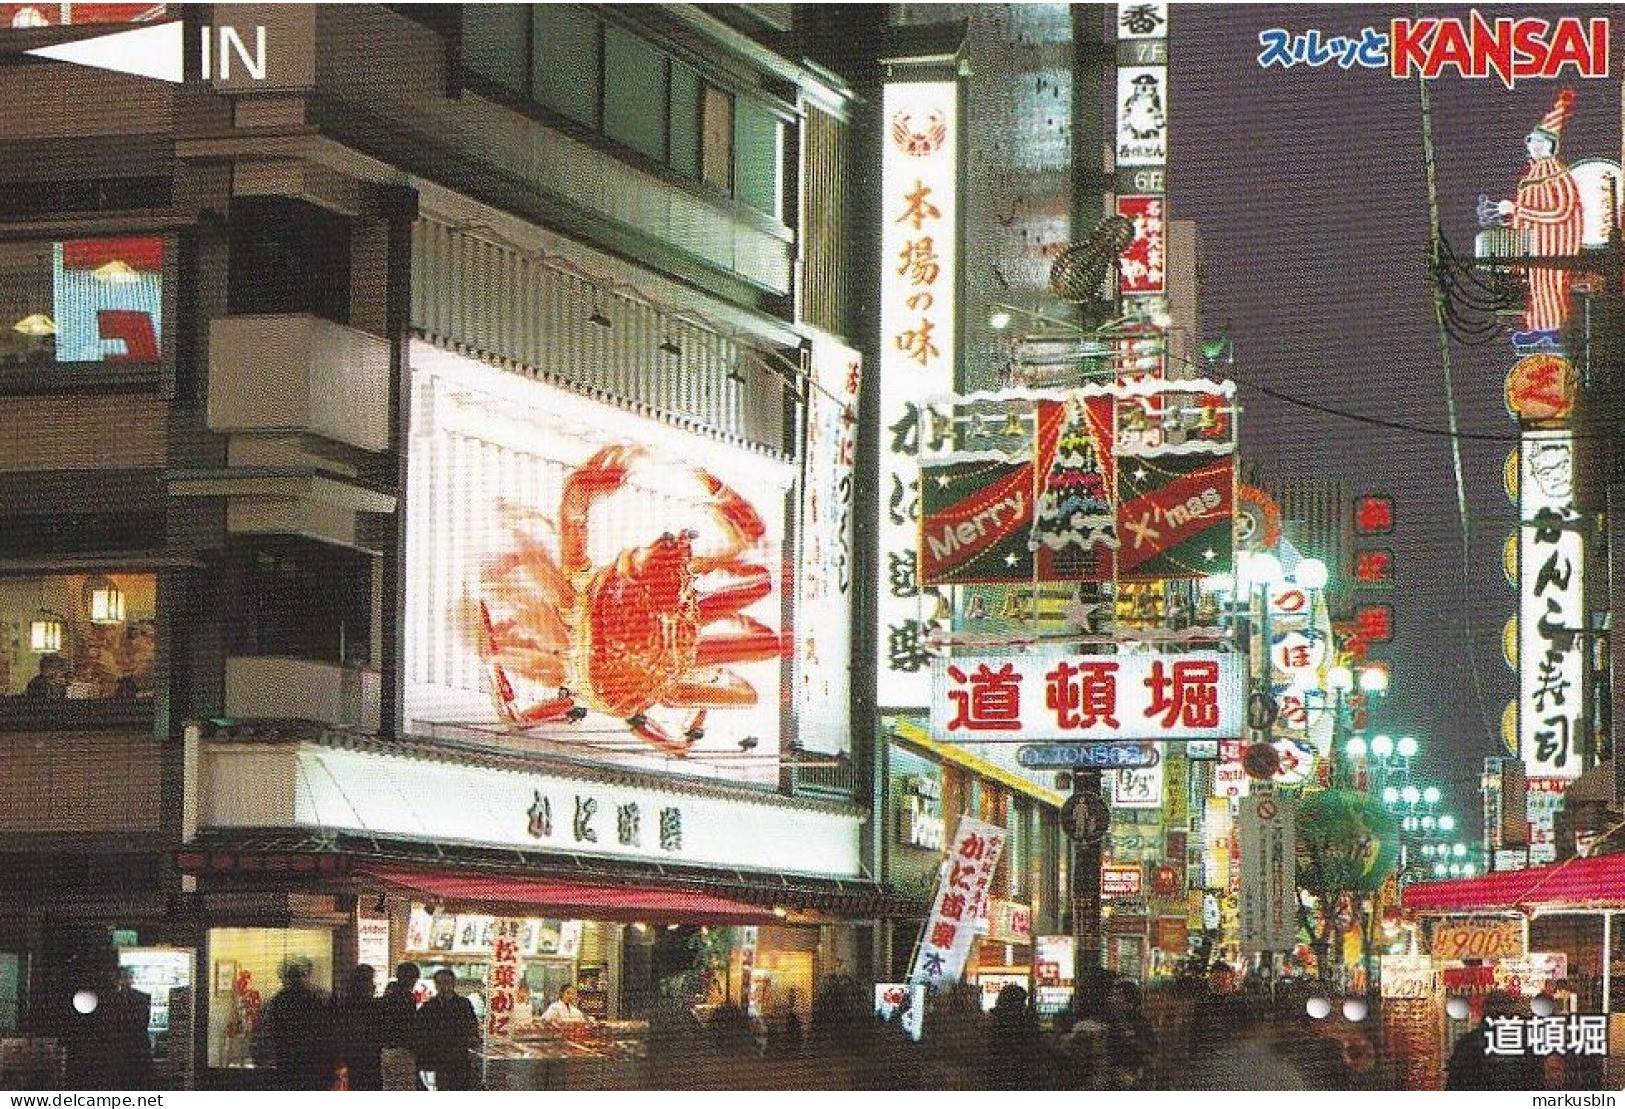 Japan Prepaid Kansai Card 3000 - Merry Christmas Decoration Street Lights Scene - Japan